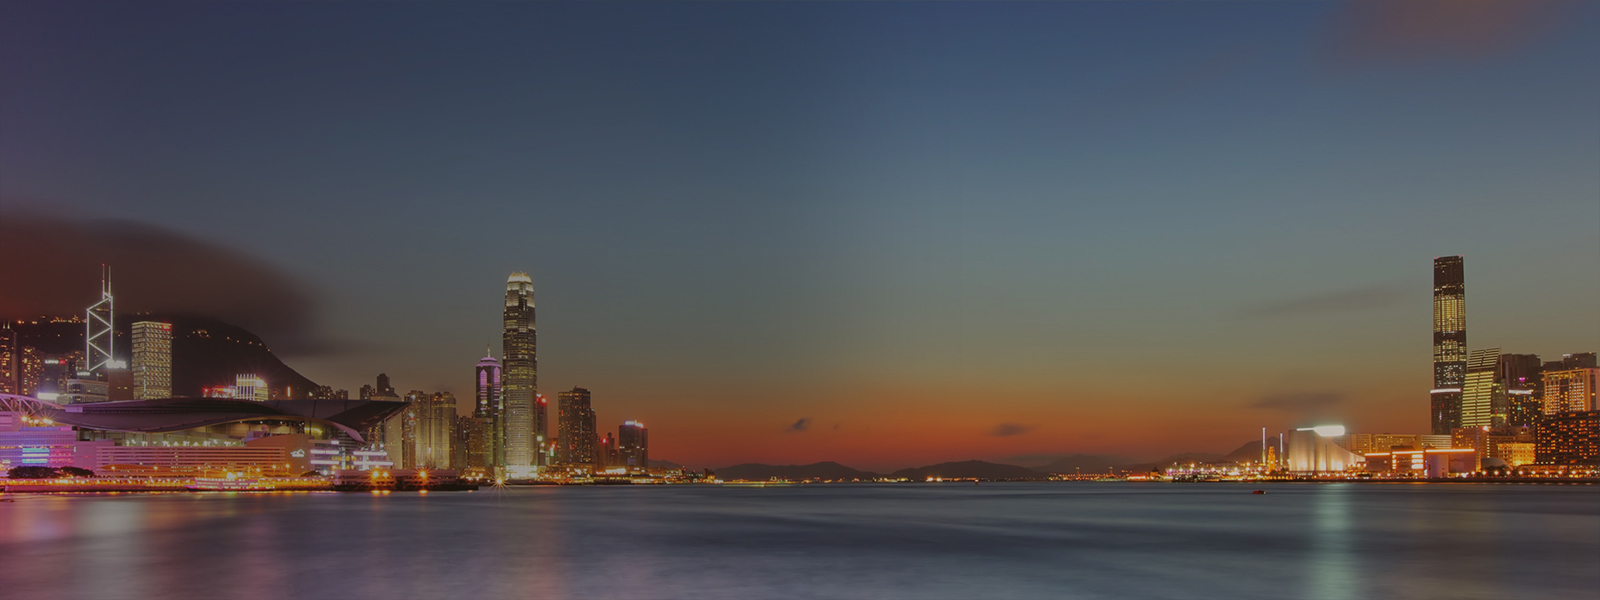 The regulatory regime for IPO sponsors in Hong Kong